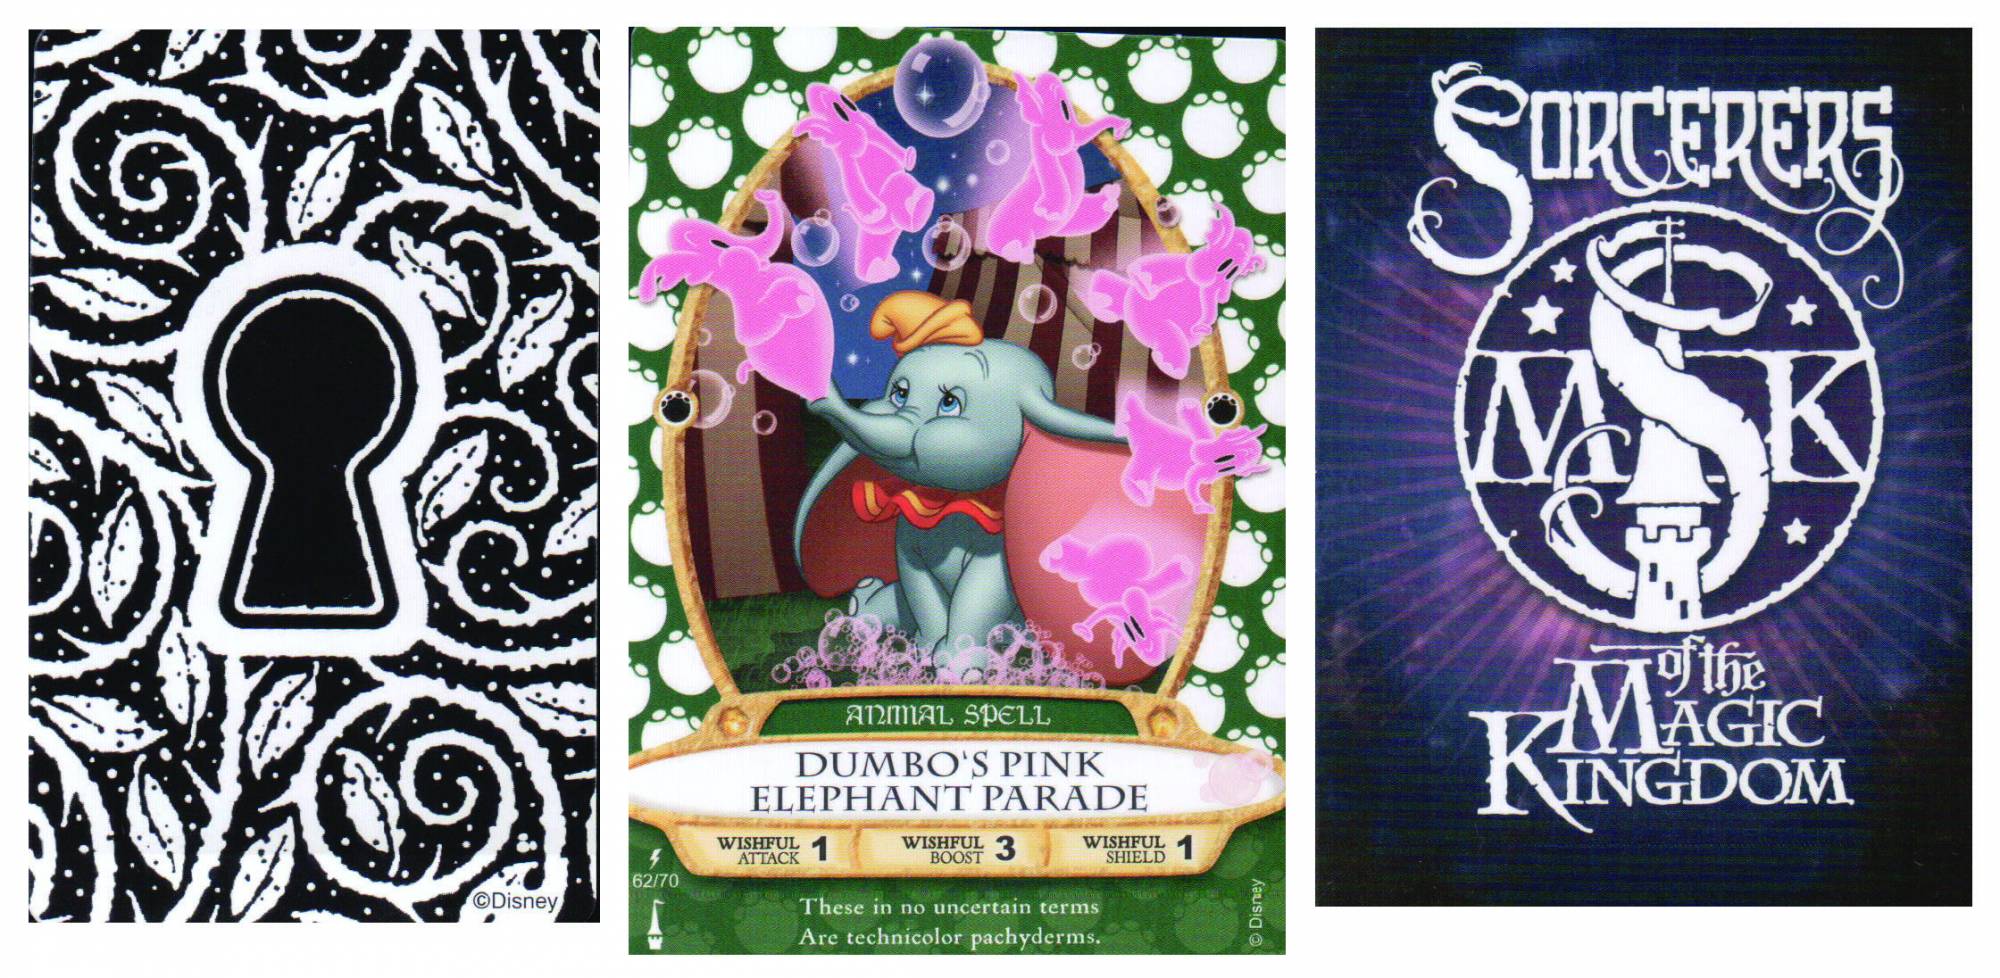 Play the interactive 'Sorcerers of the Magic Kingdom' game at Walt Disney World |PassPorter.com